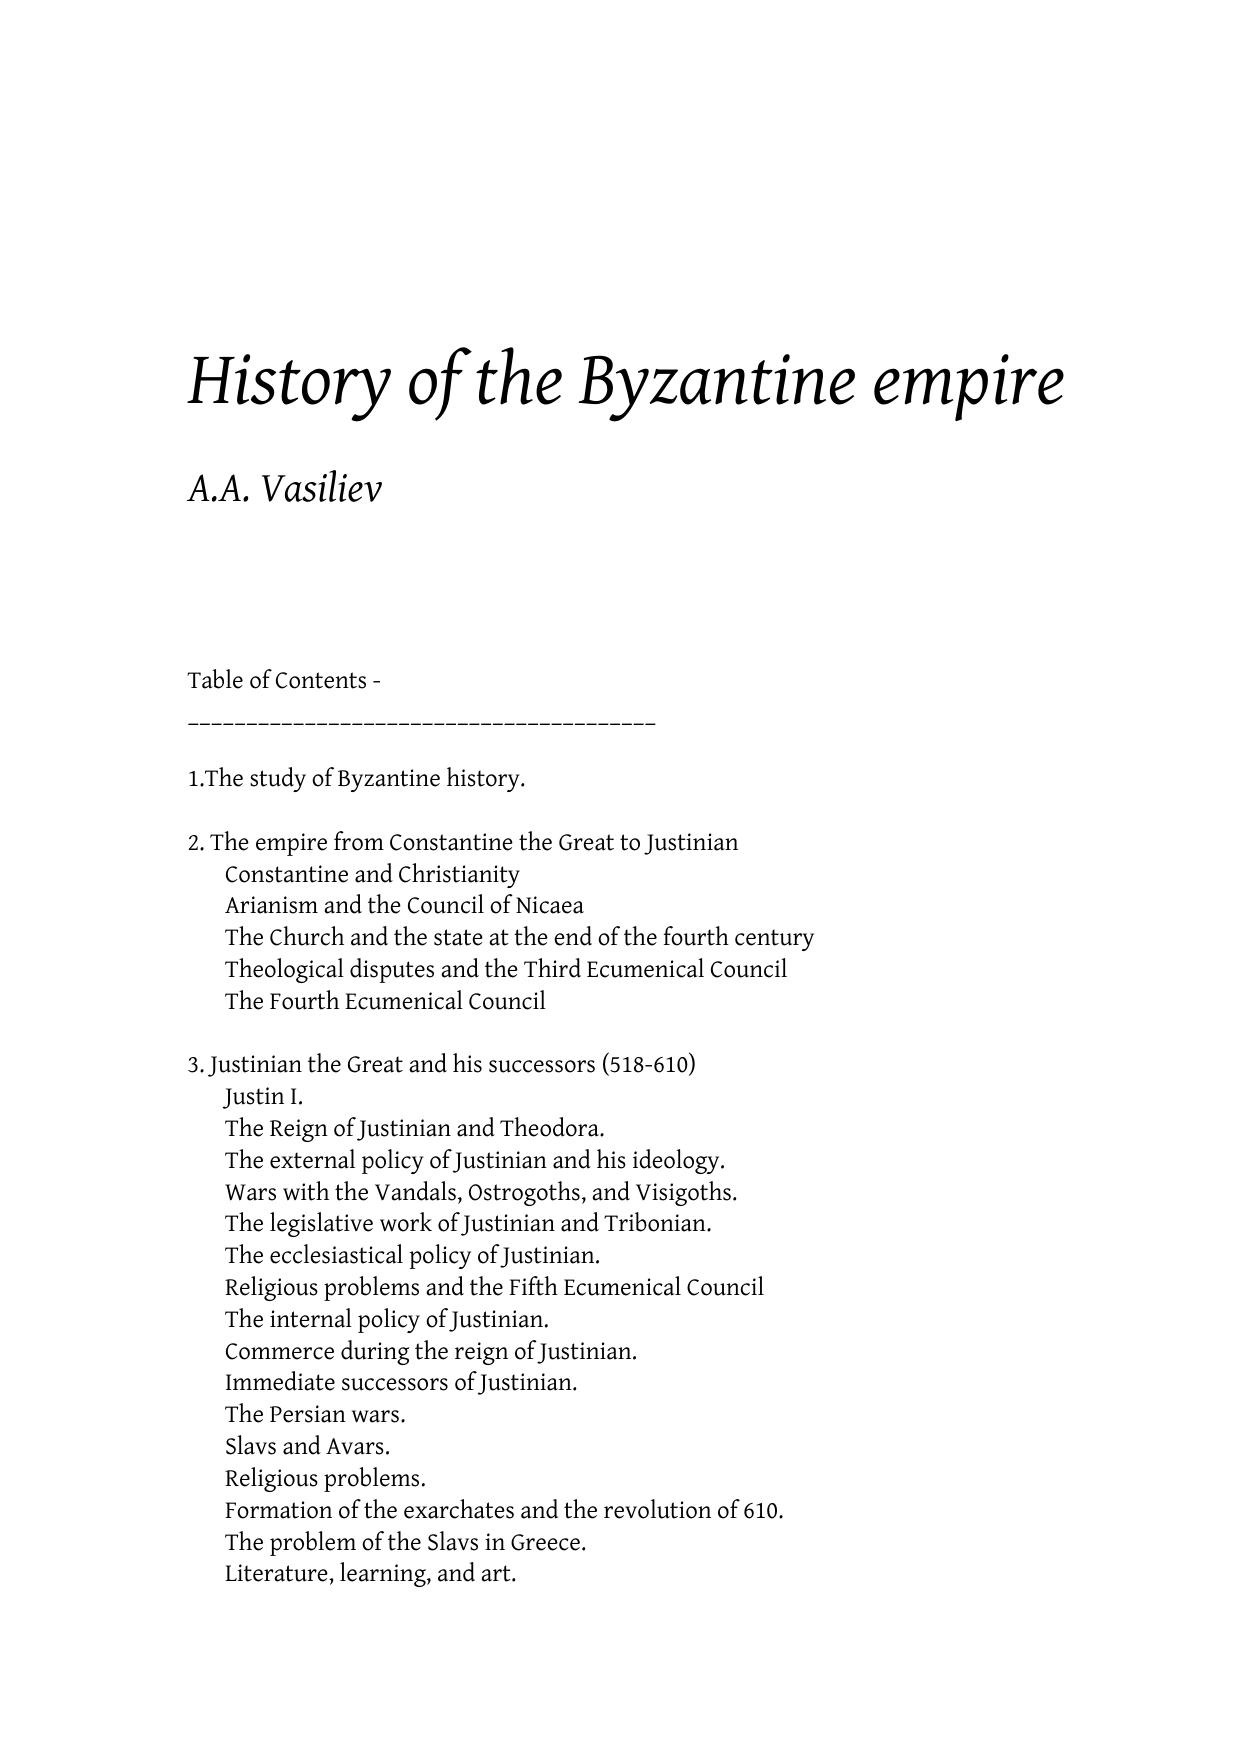 Microsoft Word - Alexeiev, History of the Byzantine empire.doc